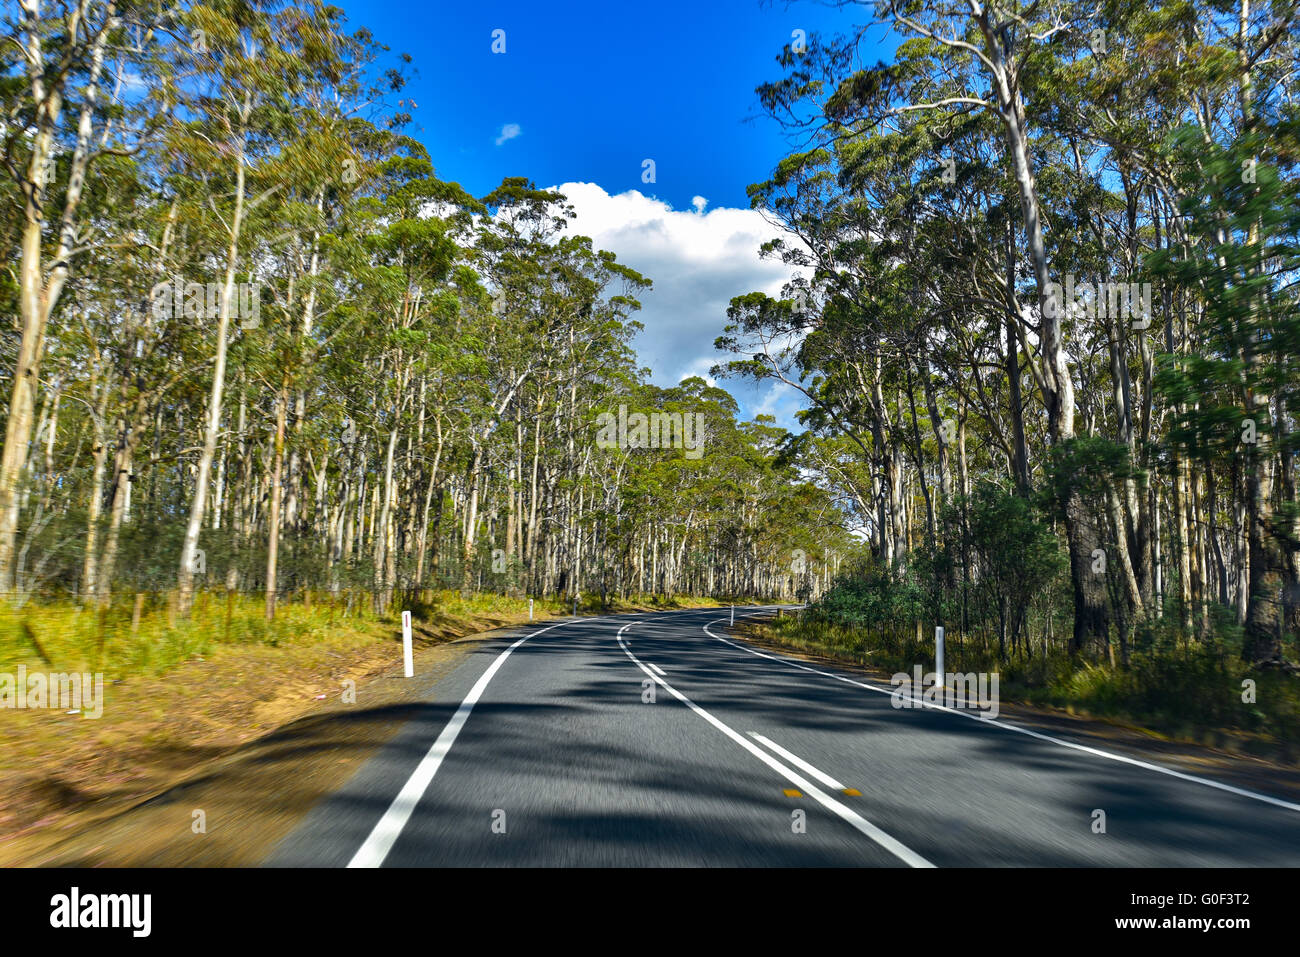 Road with trees along two sides in Tasmania, Australia Stock Photo